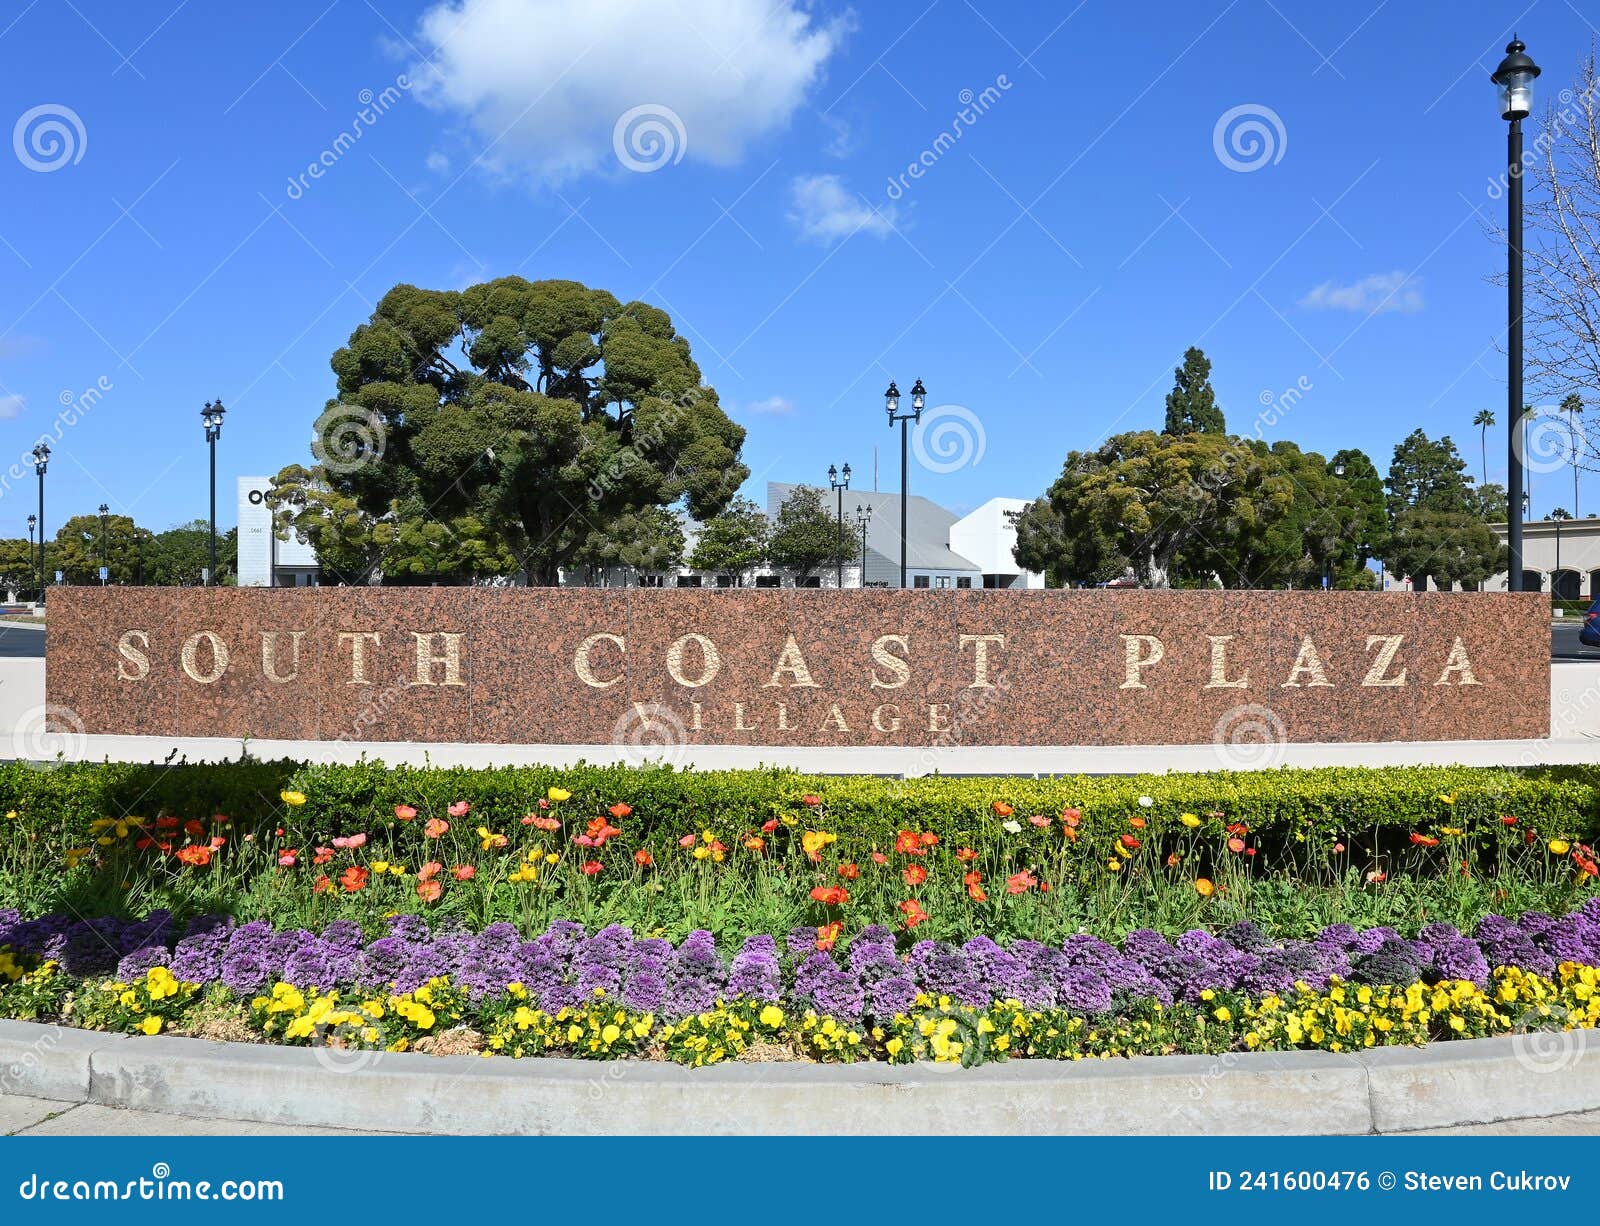 south coast plaza restaurants